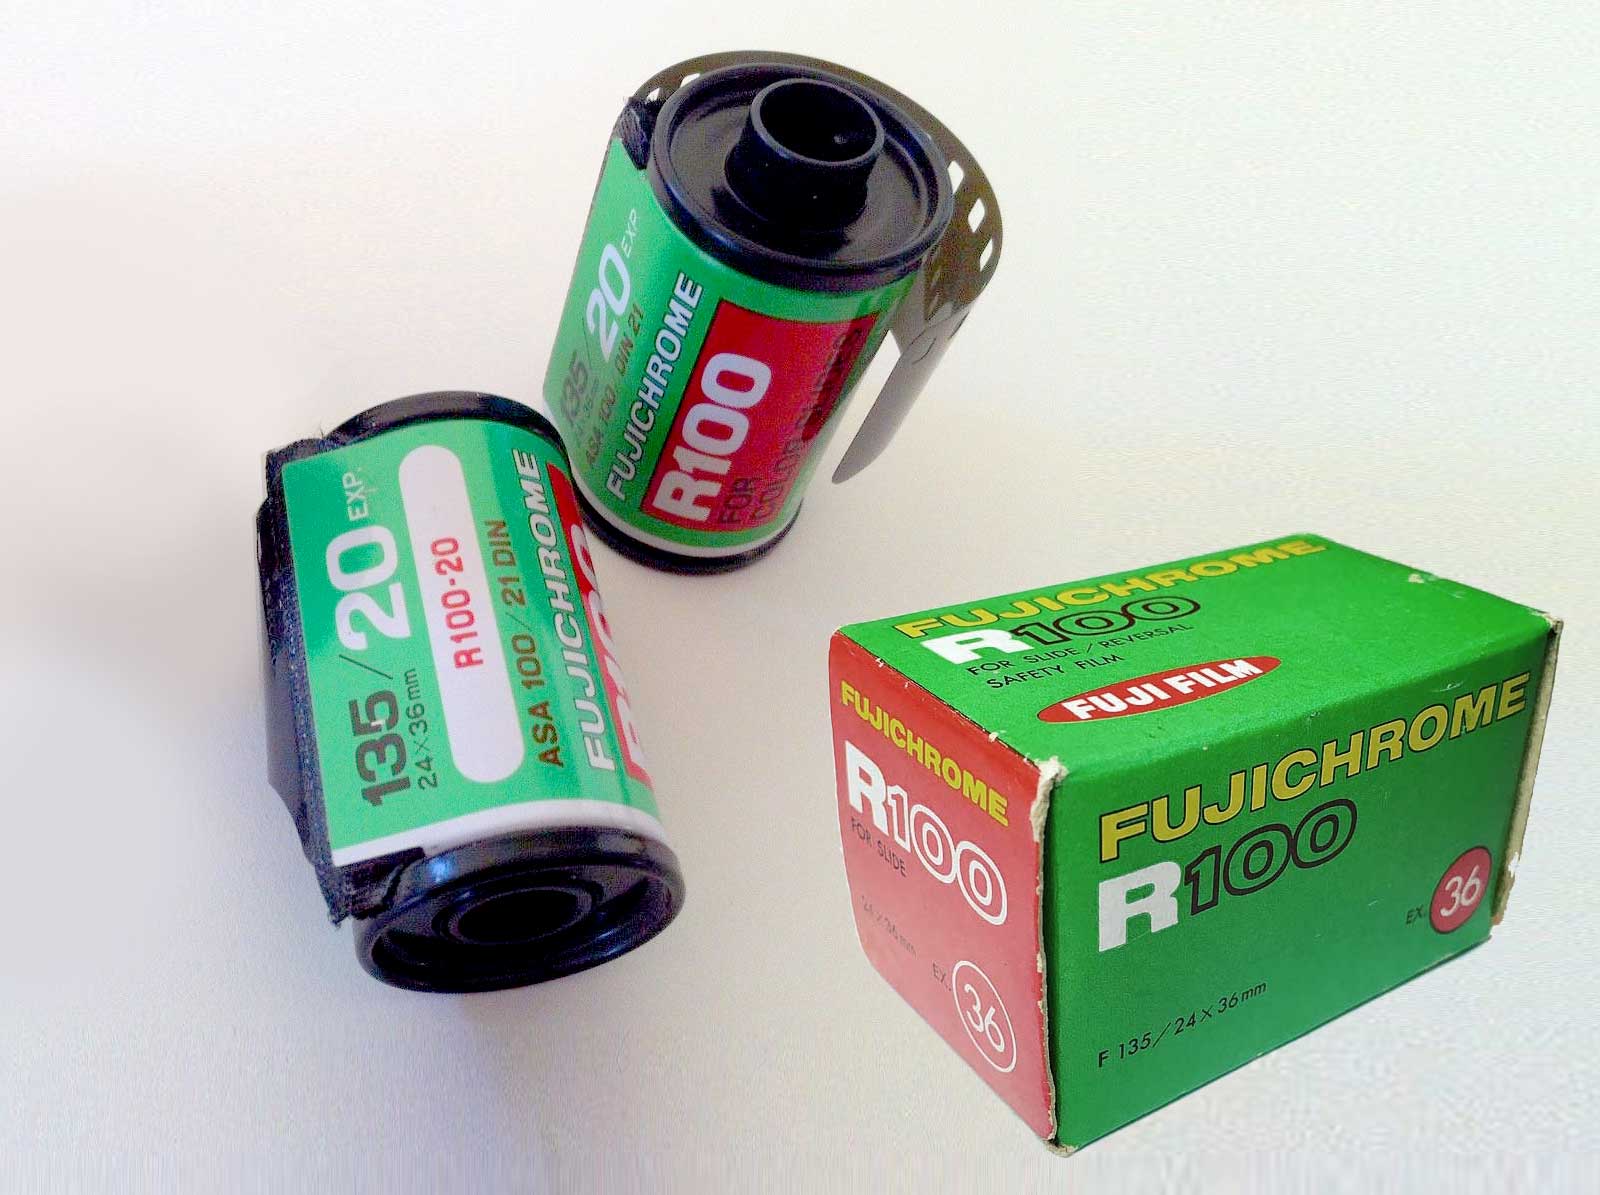 Fujicolor R100 35mm film